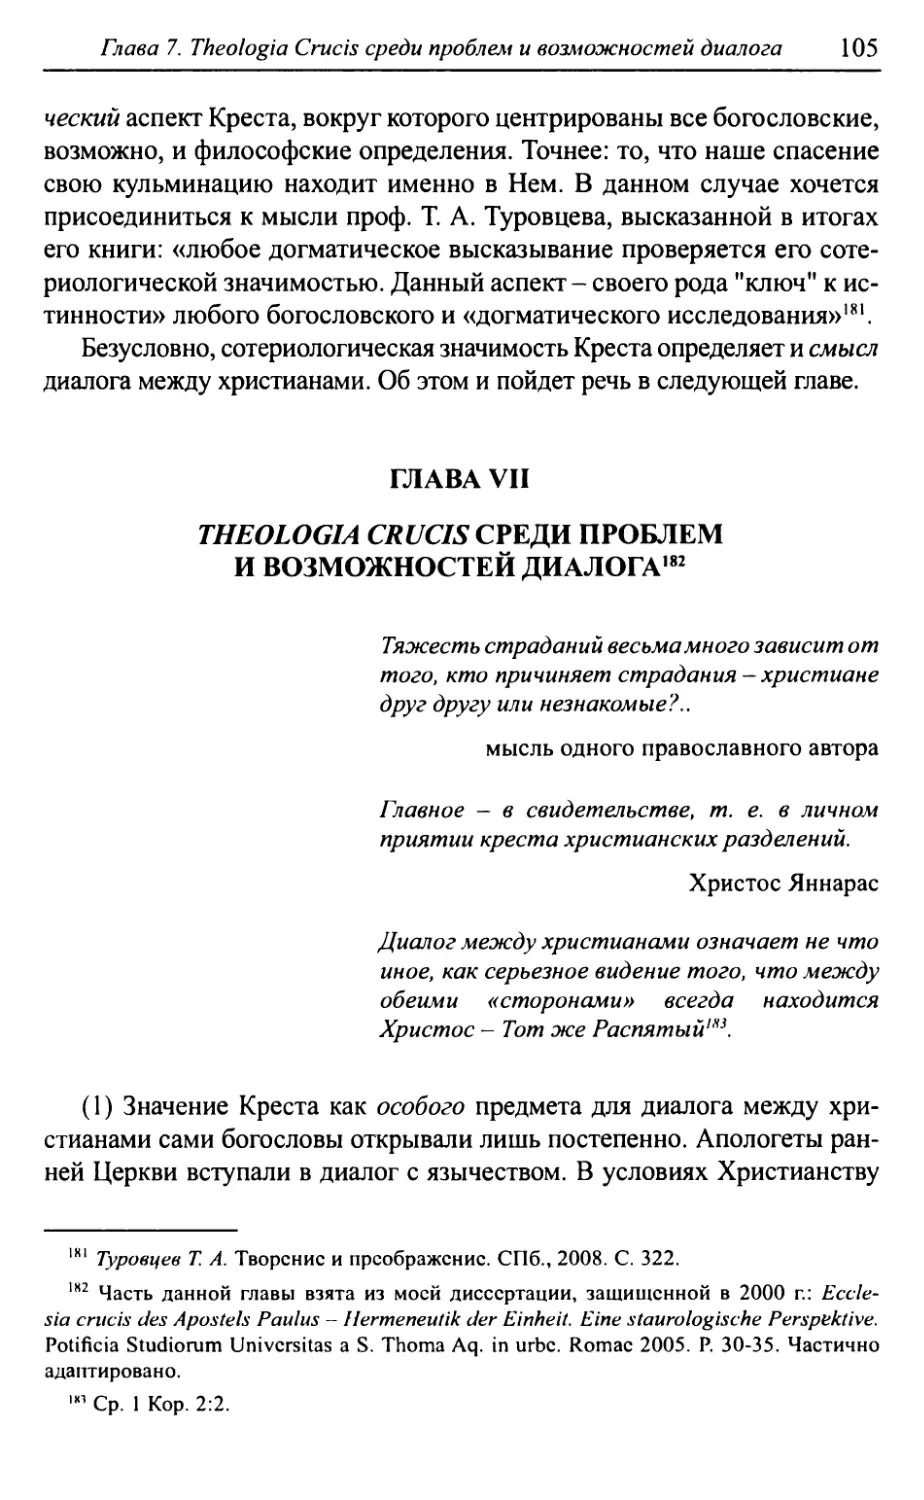 Глава VII. Theologia Crucis. Среди проблем и возможностей диалога